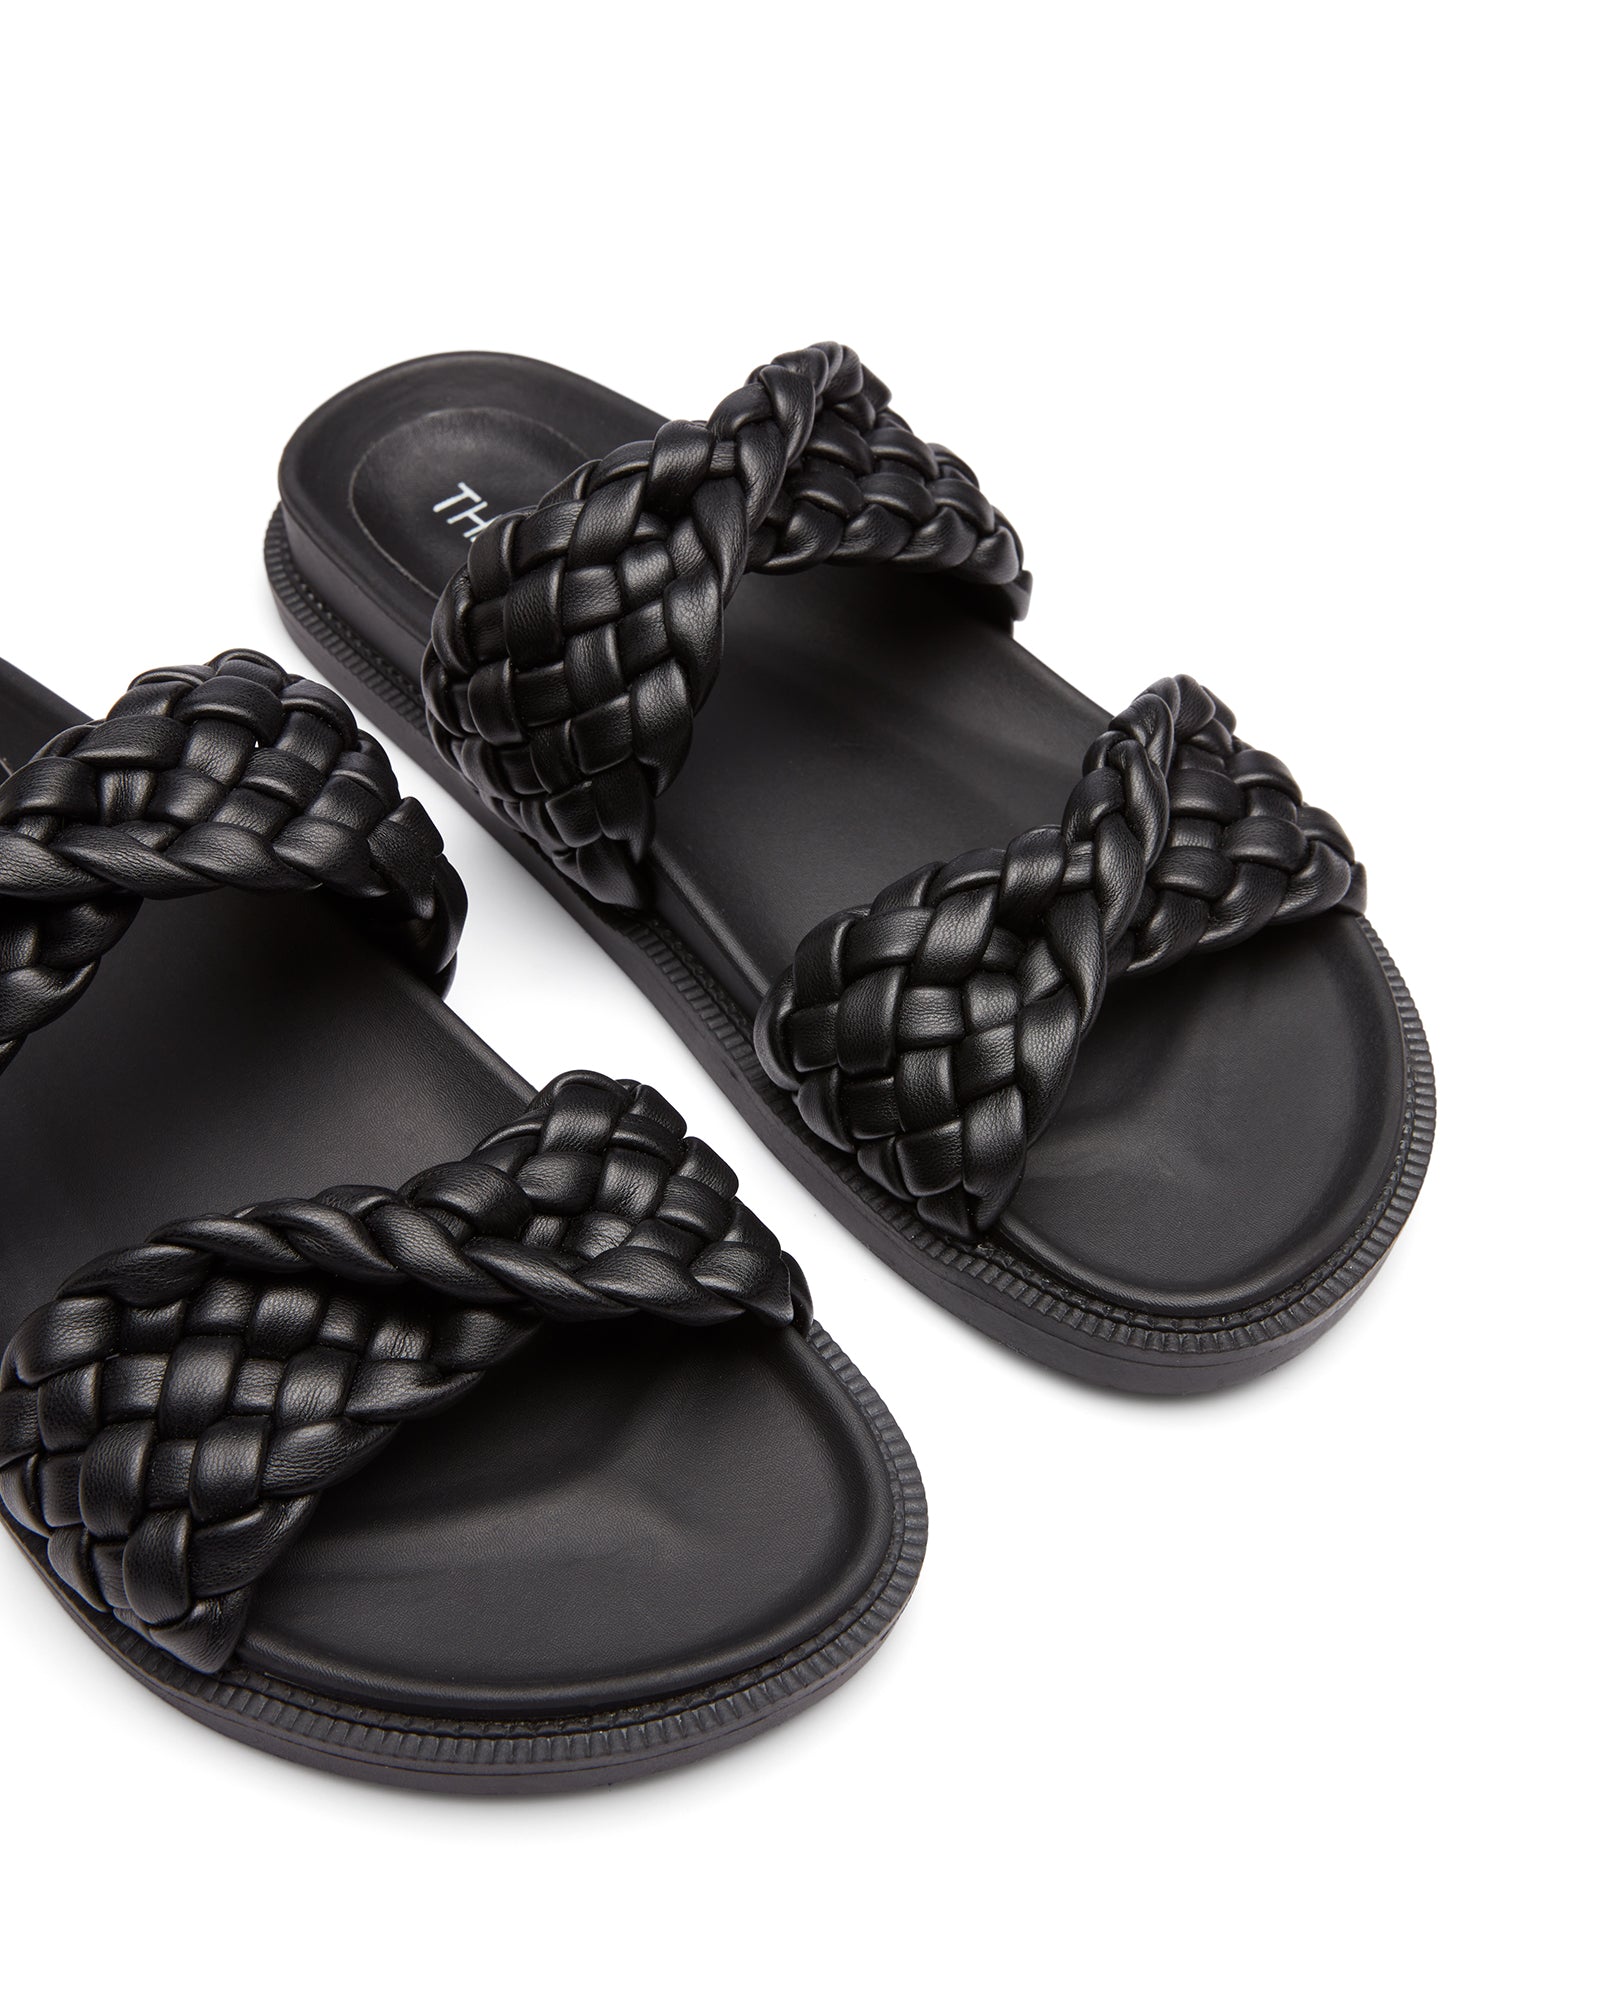 Therapy Shoes Evil Black | Women's Sandals | Slides | Flats | Woven